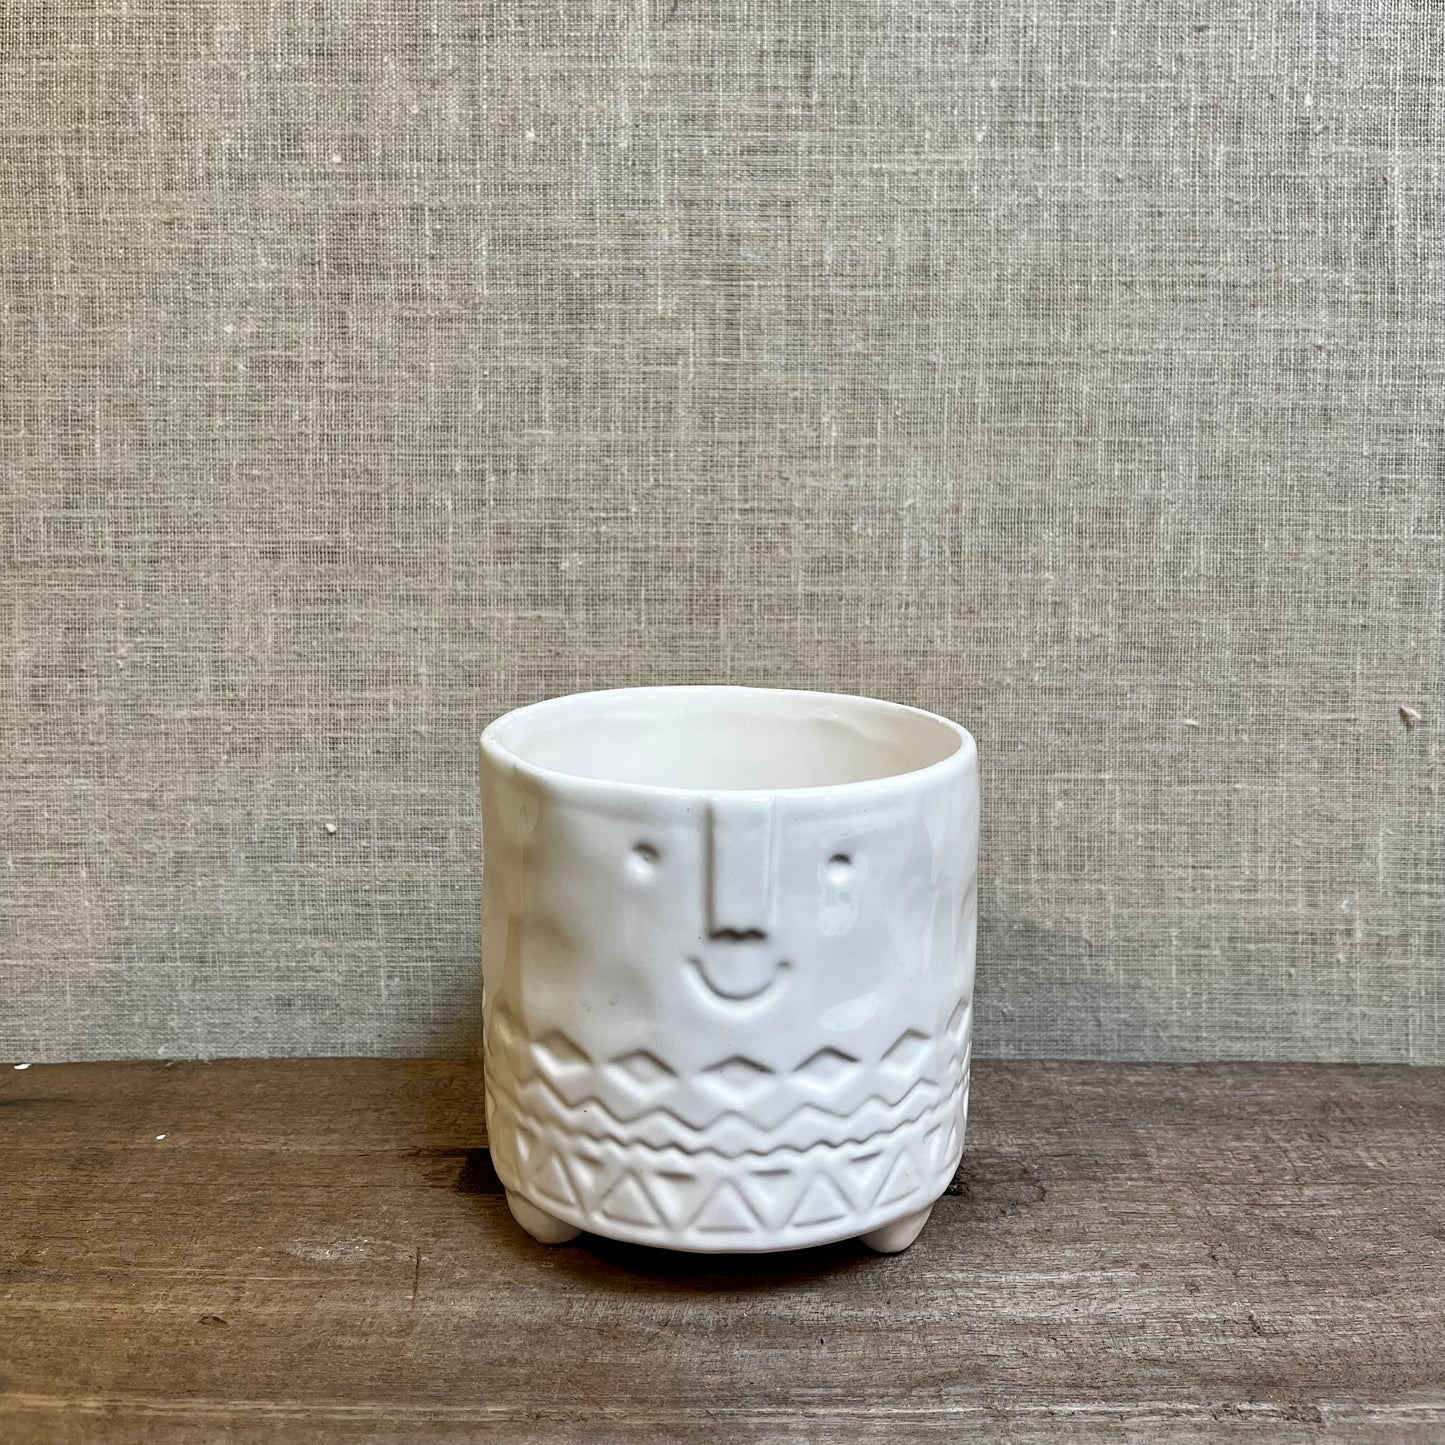 Ceramic Pot - White Face